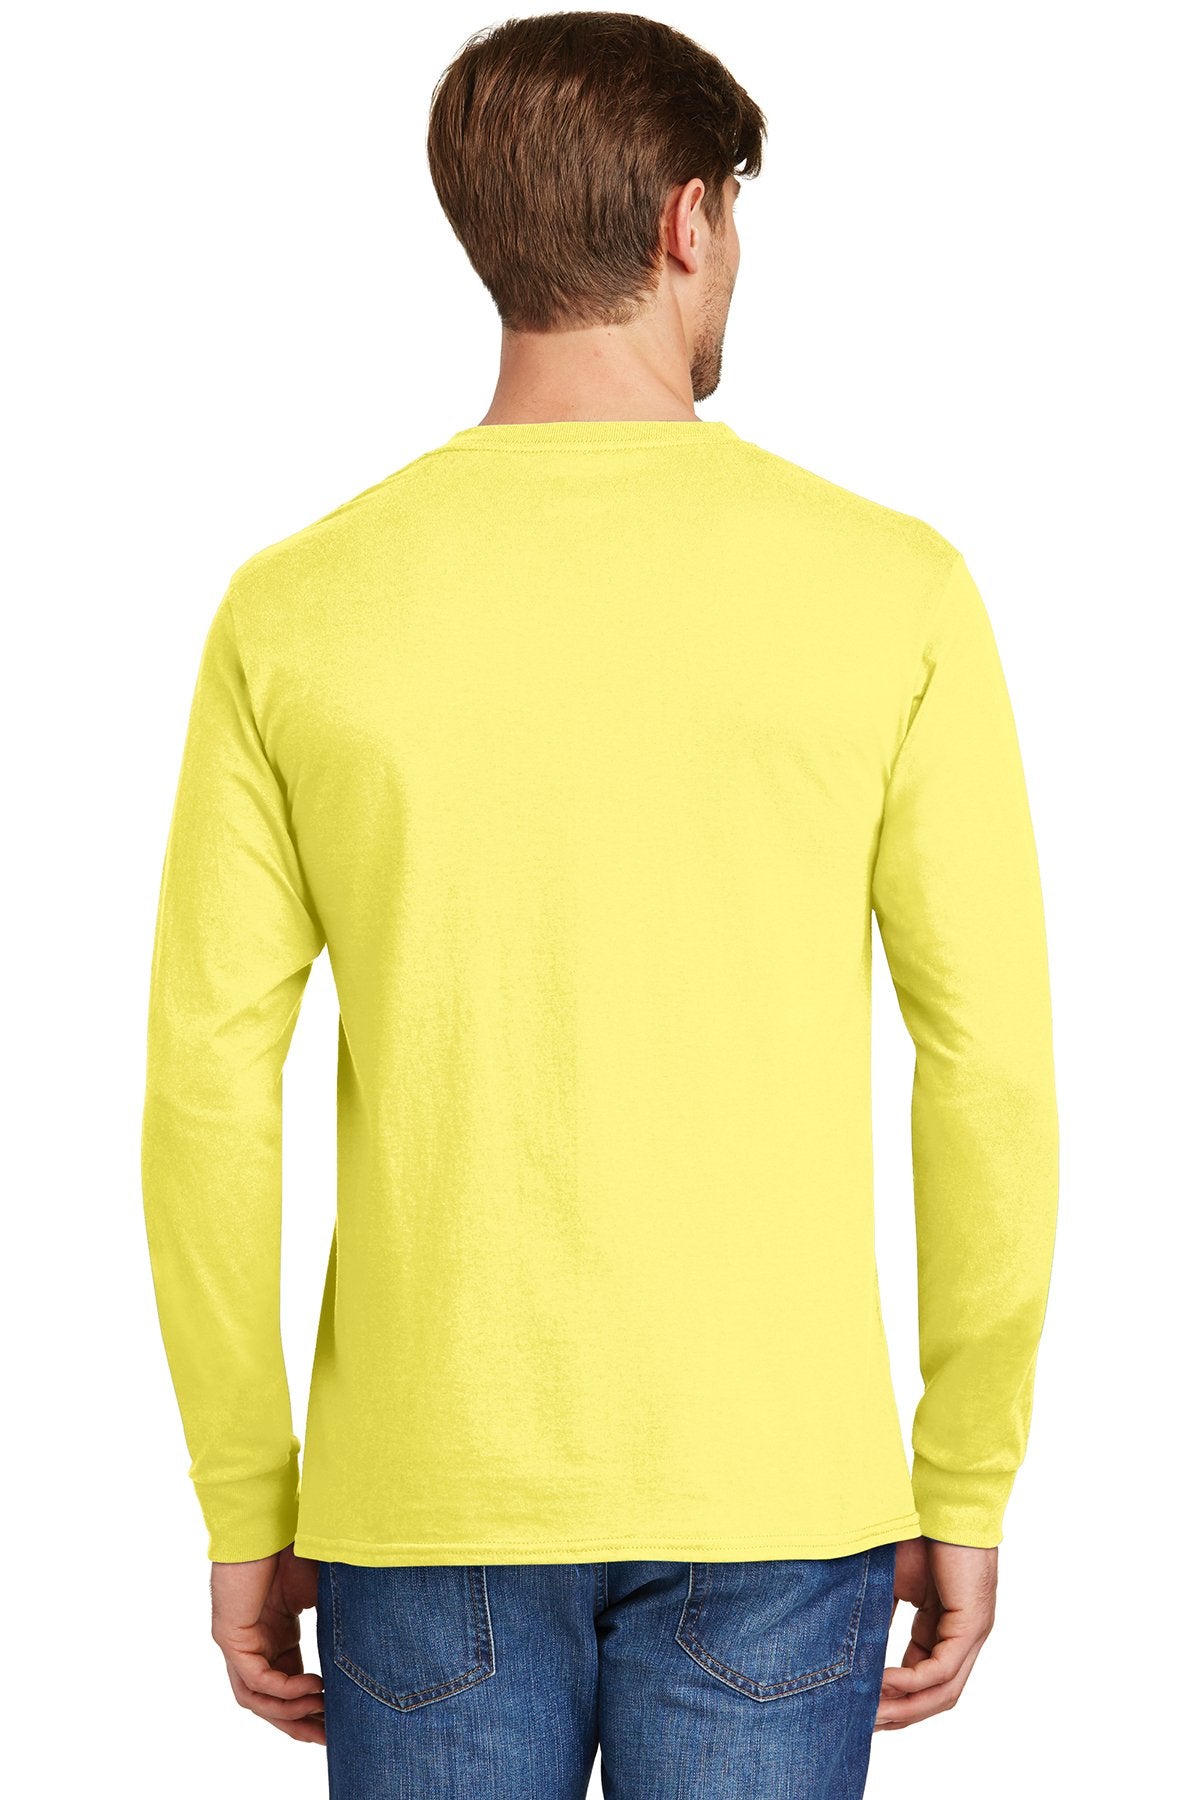 hanes tagless cotton long sleeve t shirt 5586 yellow